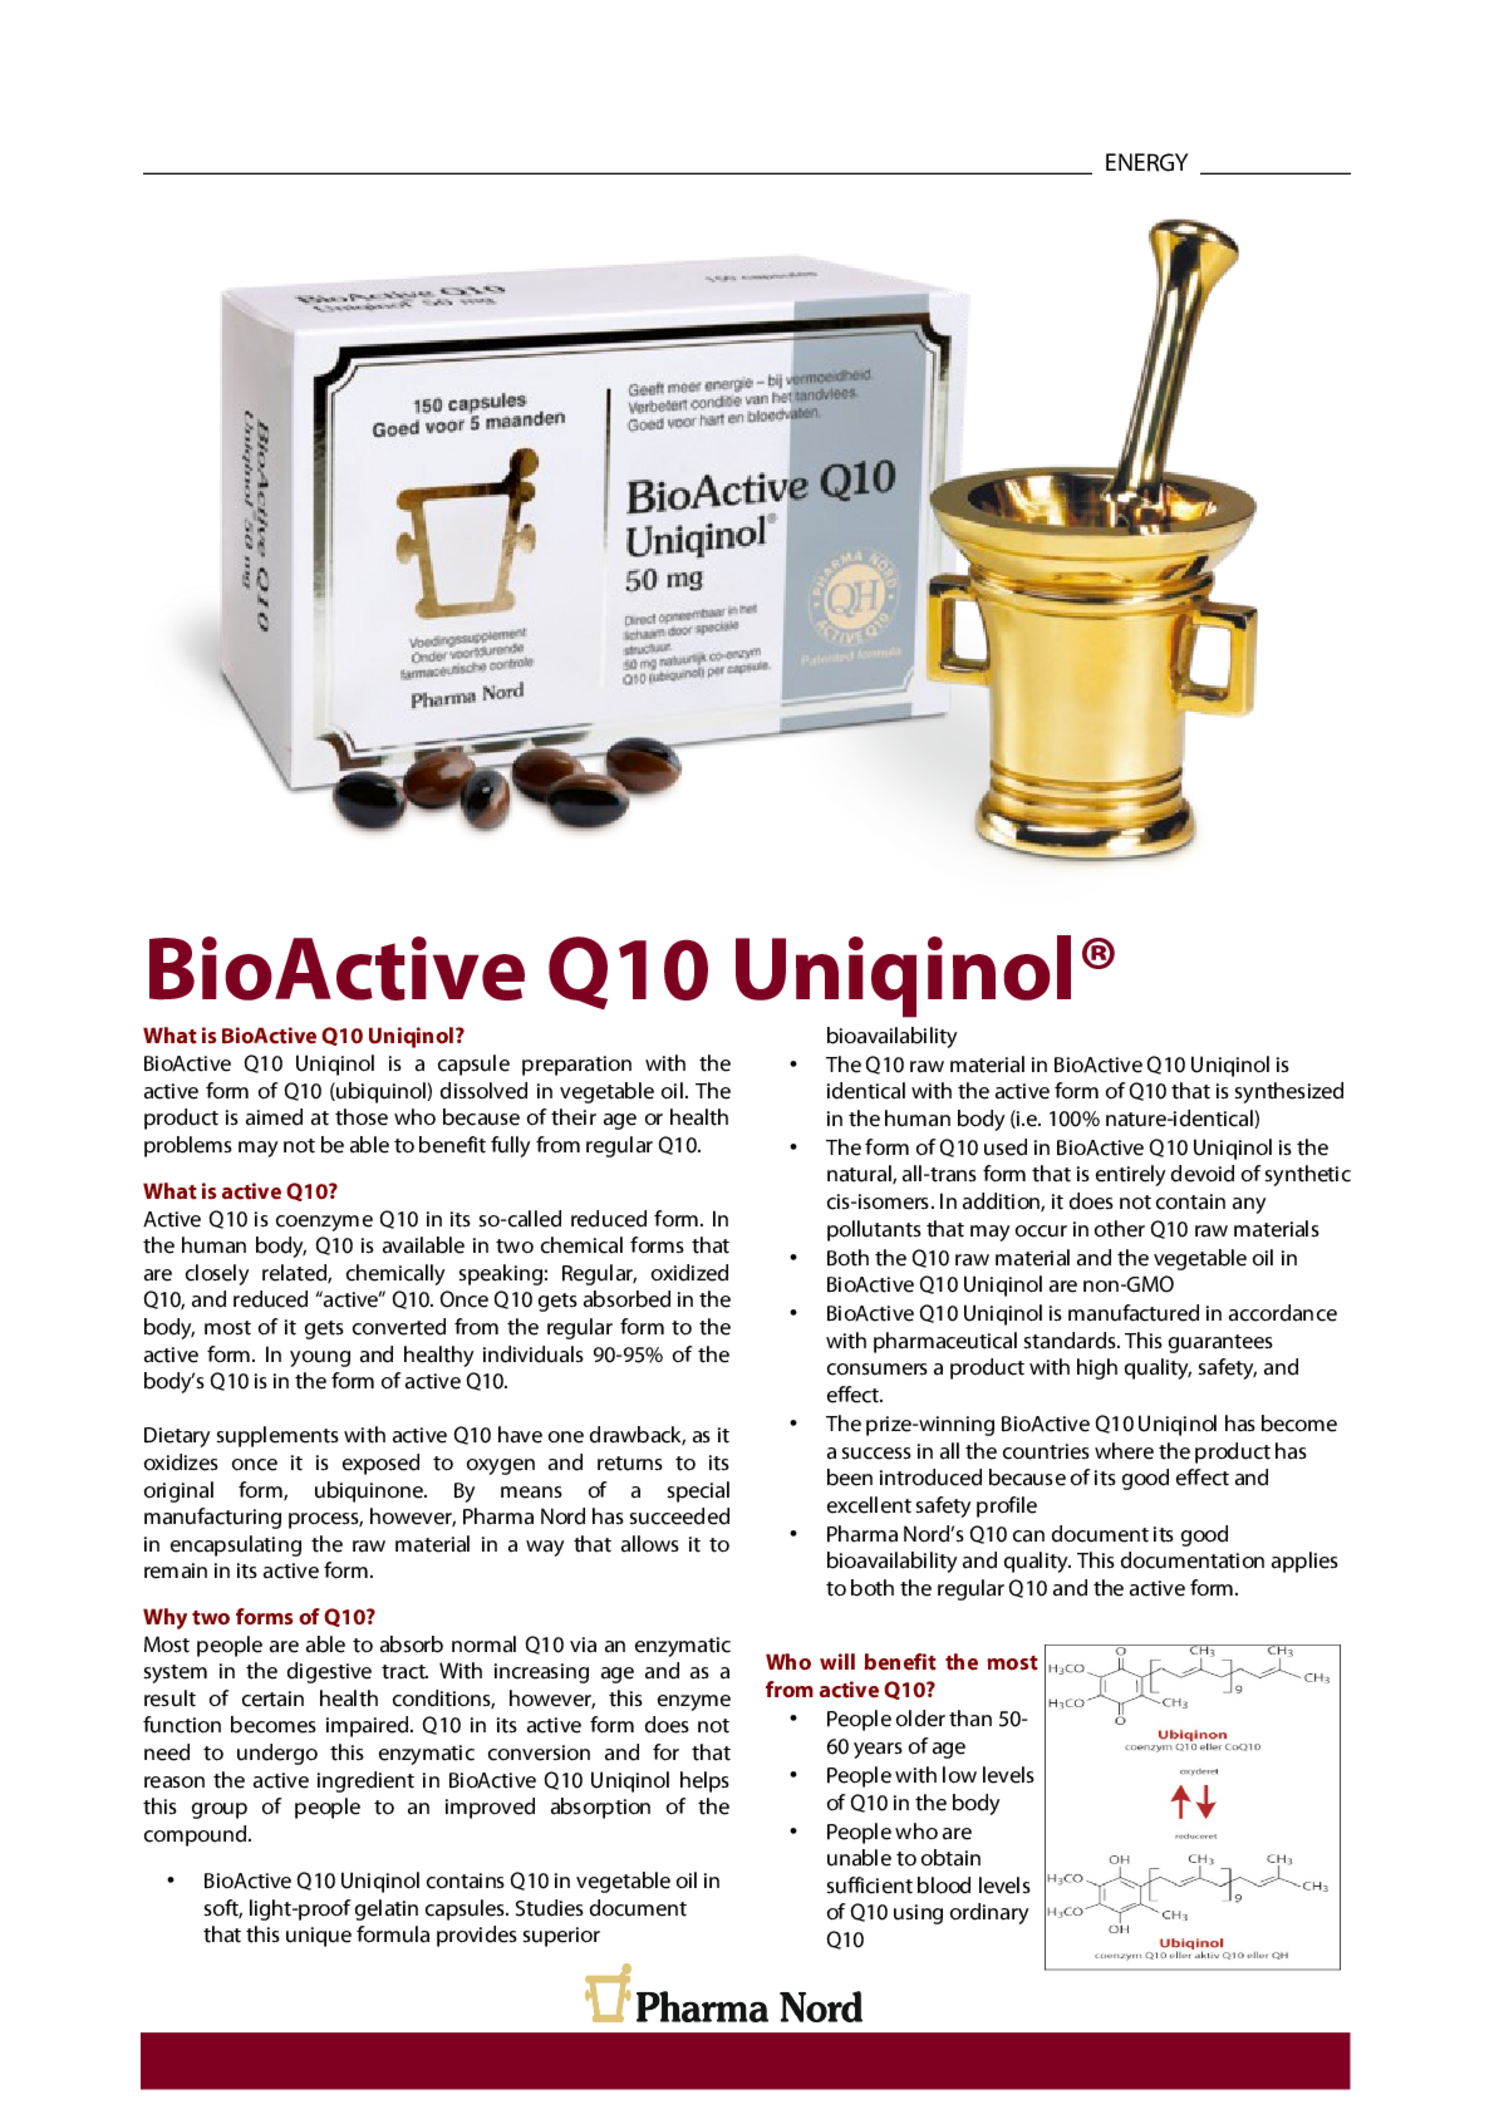 BioActive Uniqinol 50mg QH Capsules afbeelding van document #1, gebruiksaanwijzing